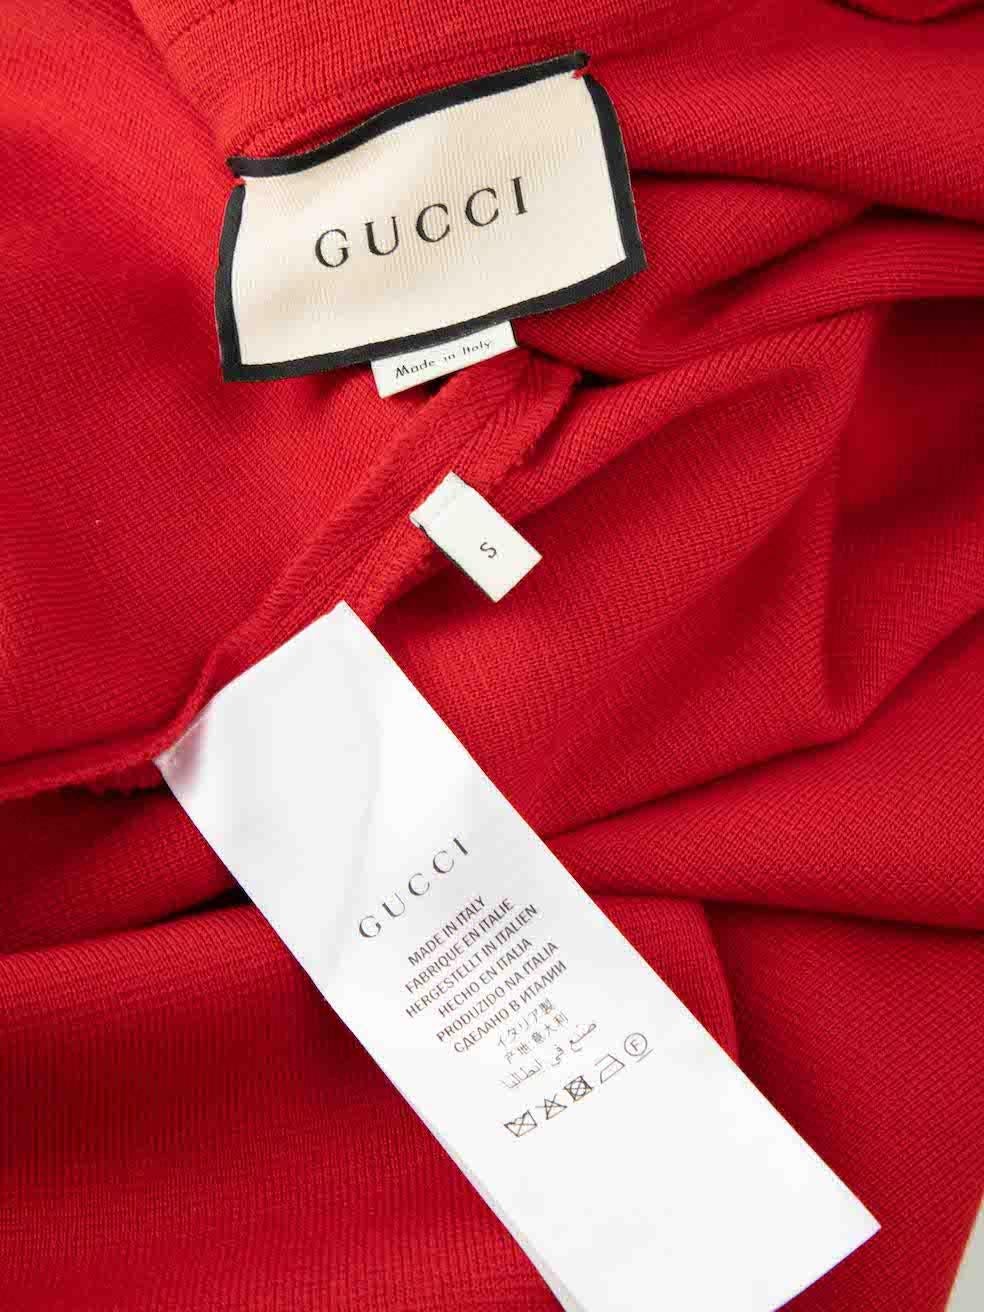 Gucci Women's Red Wool Knit Contrast Trim Cardigan 1